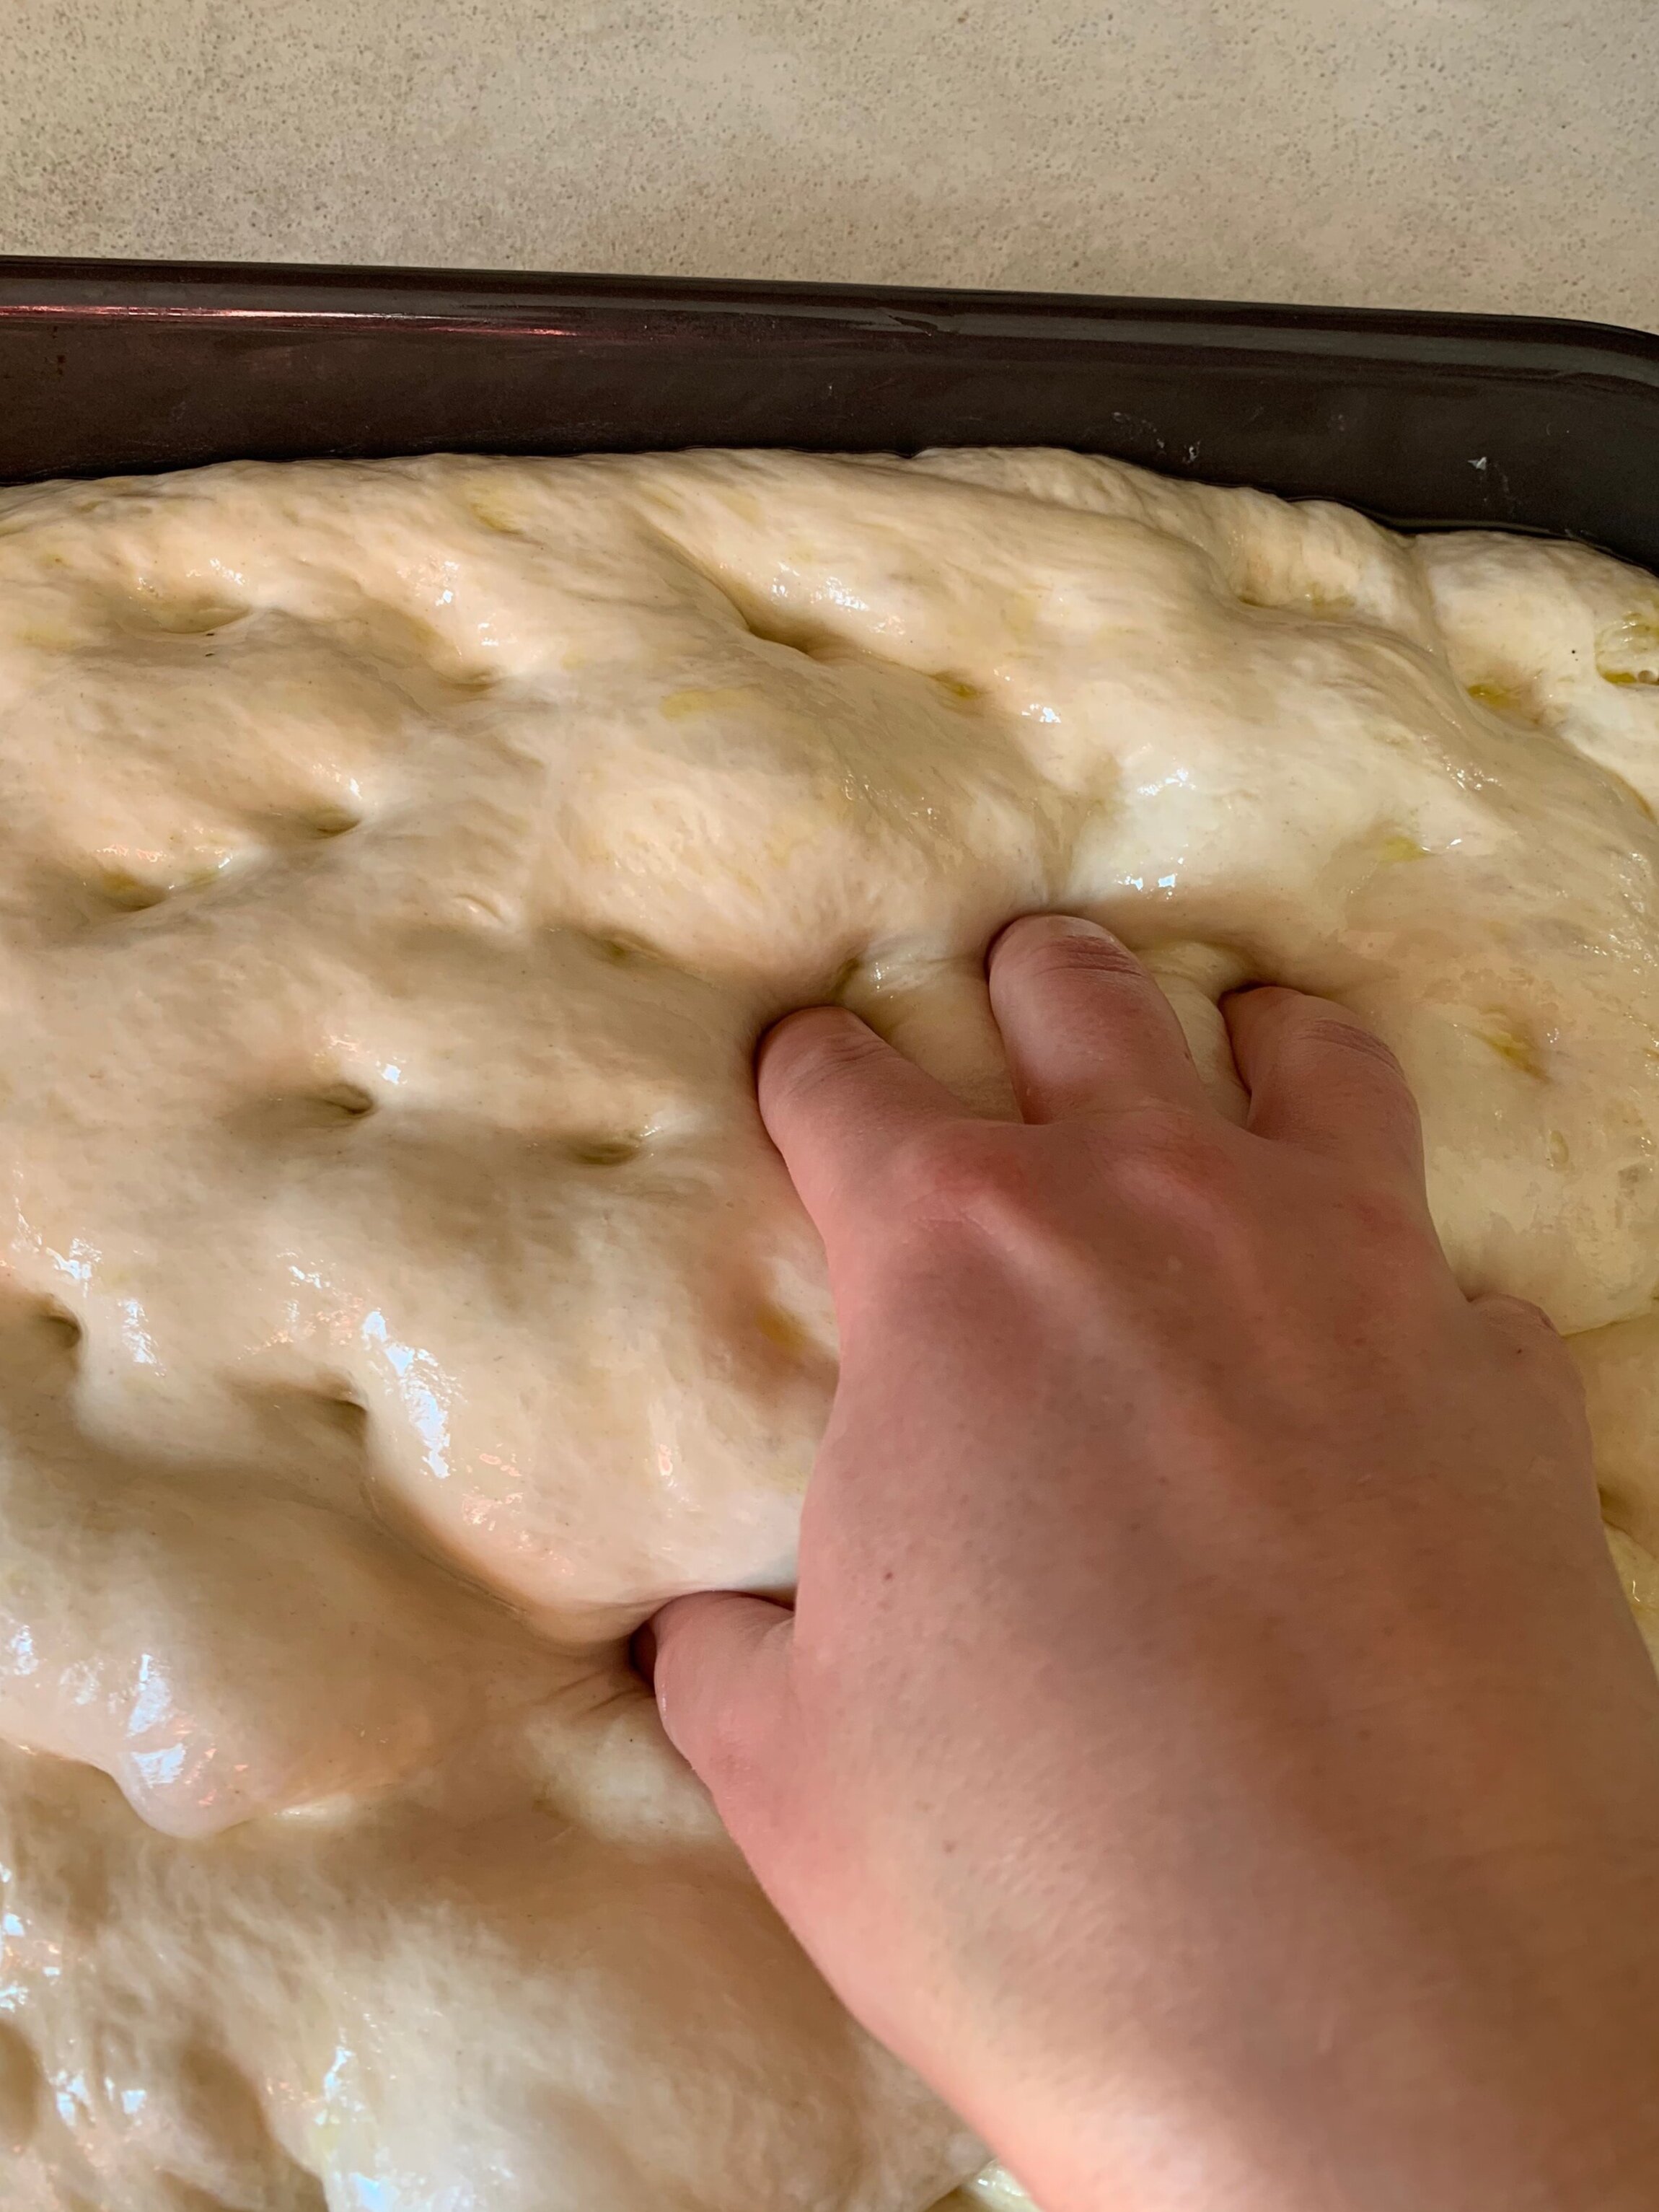 Dimpling the focaccia dough